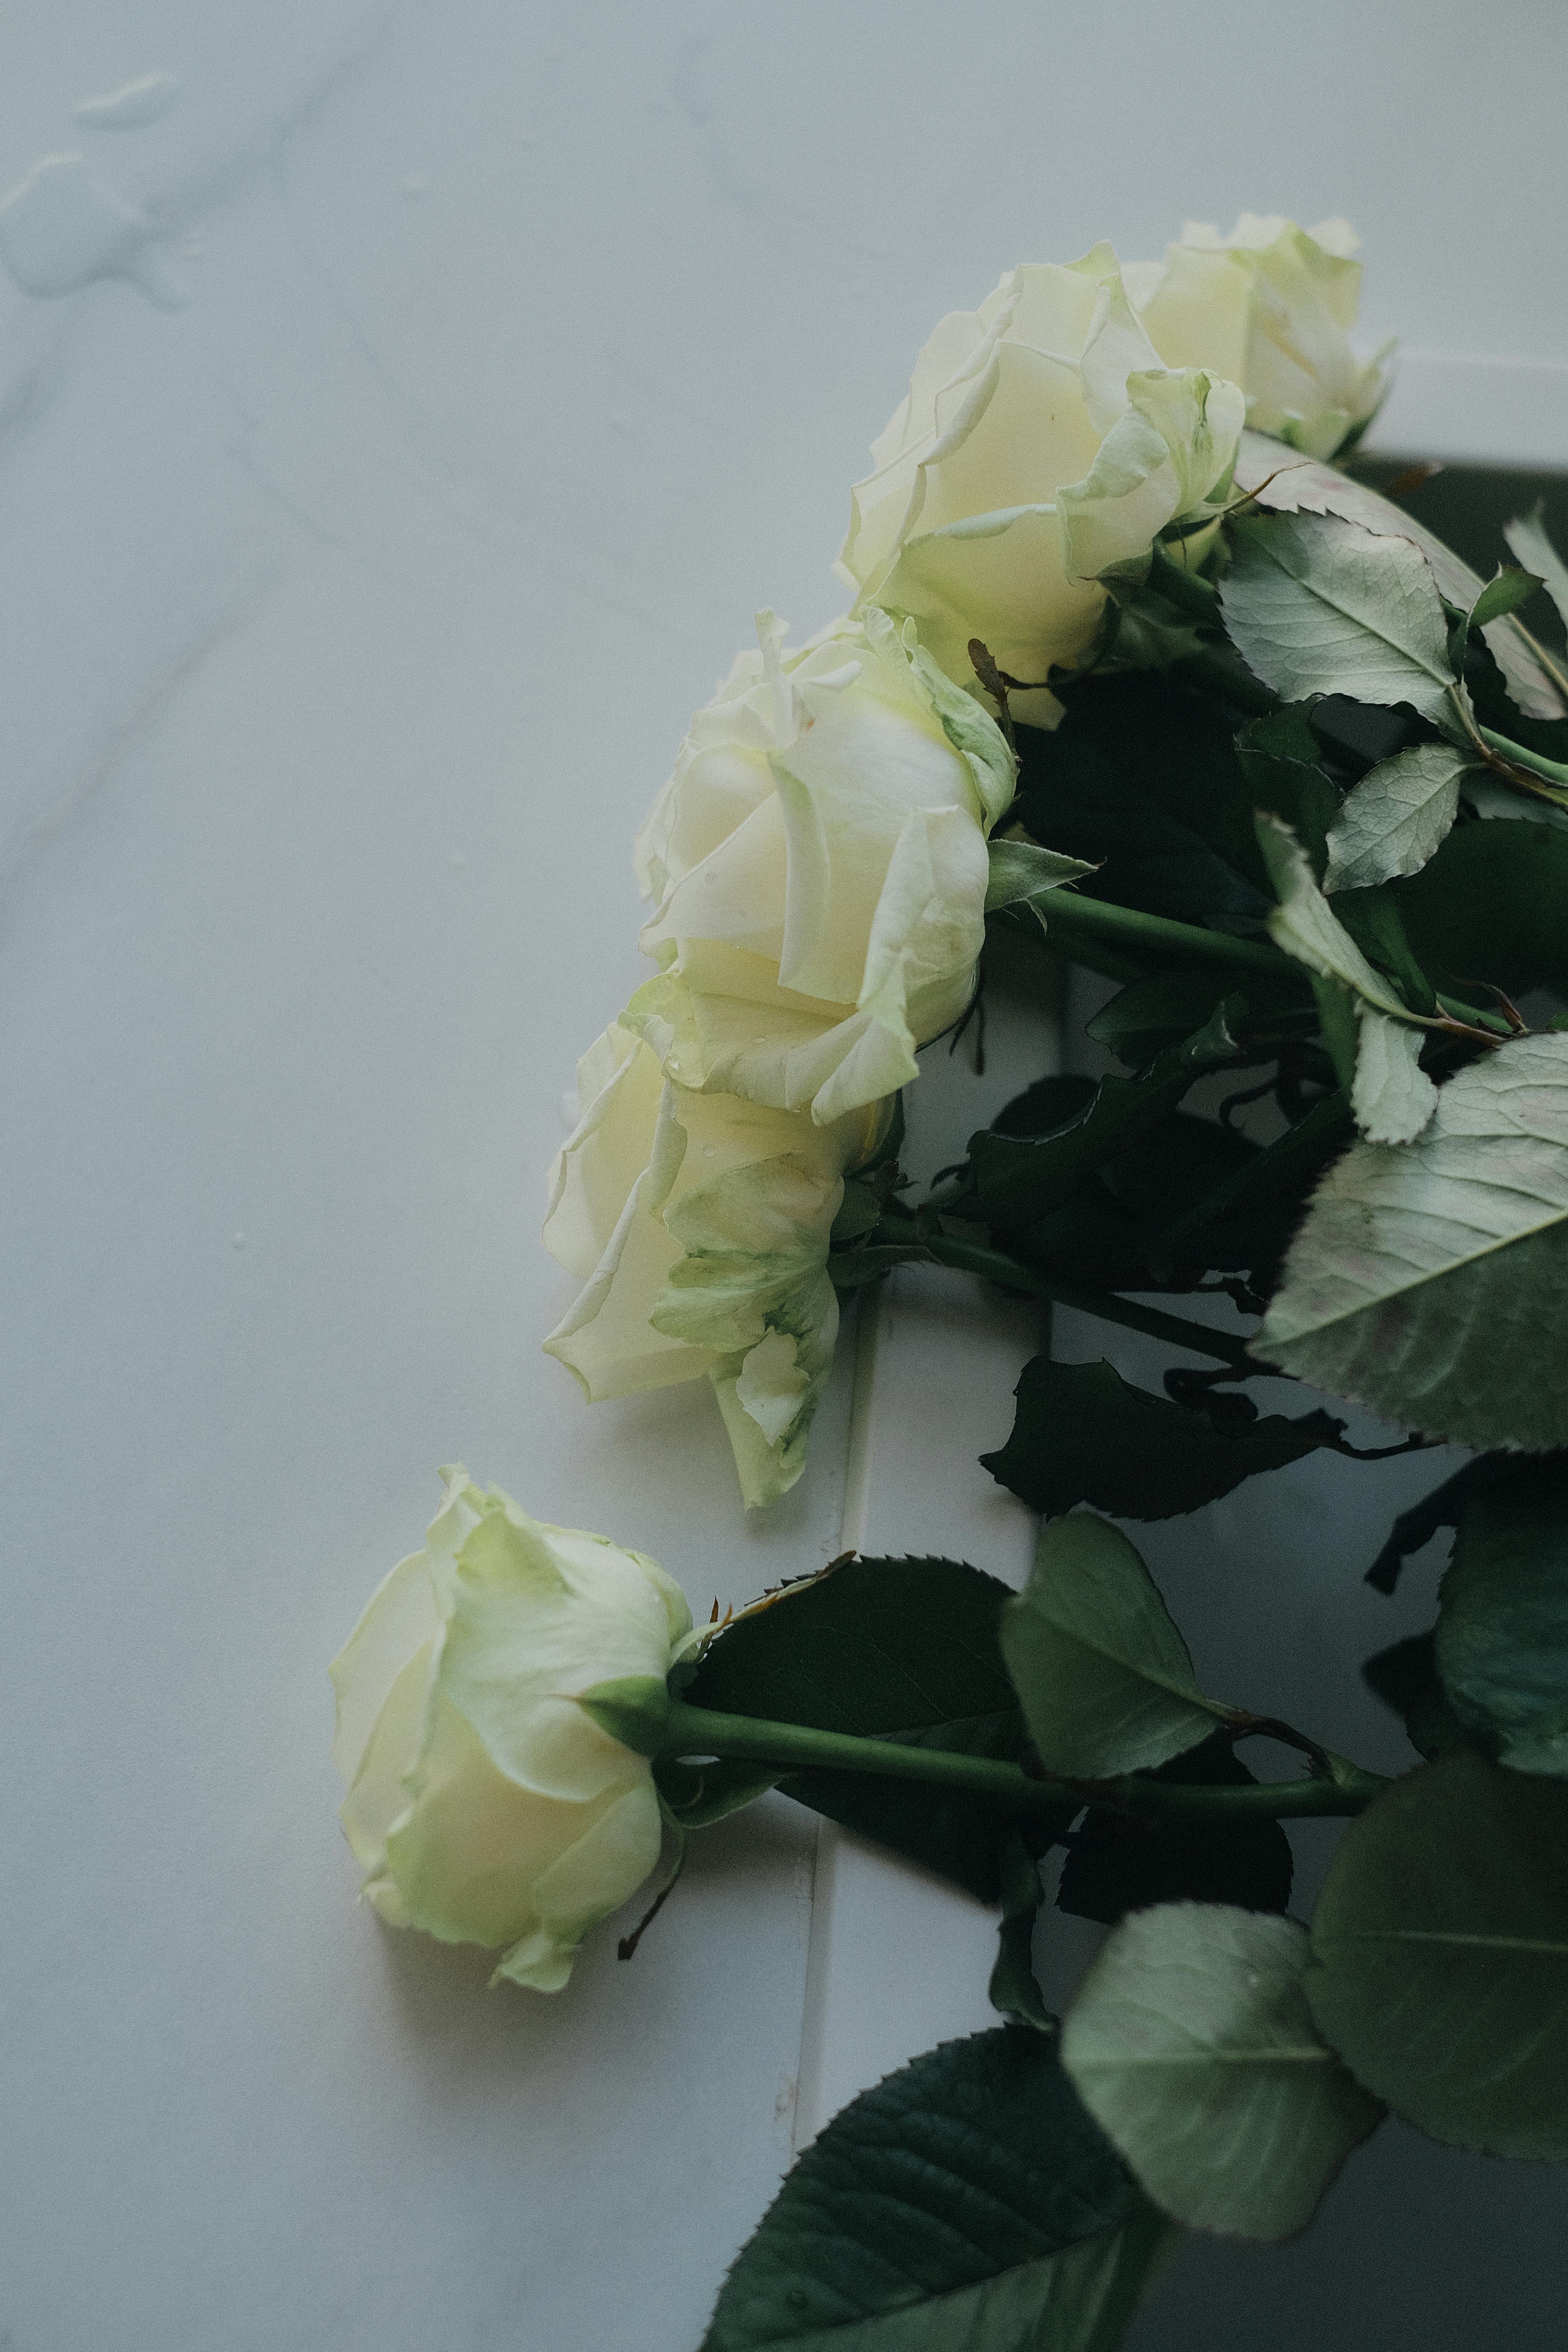 white roses photography tumblr